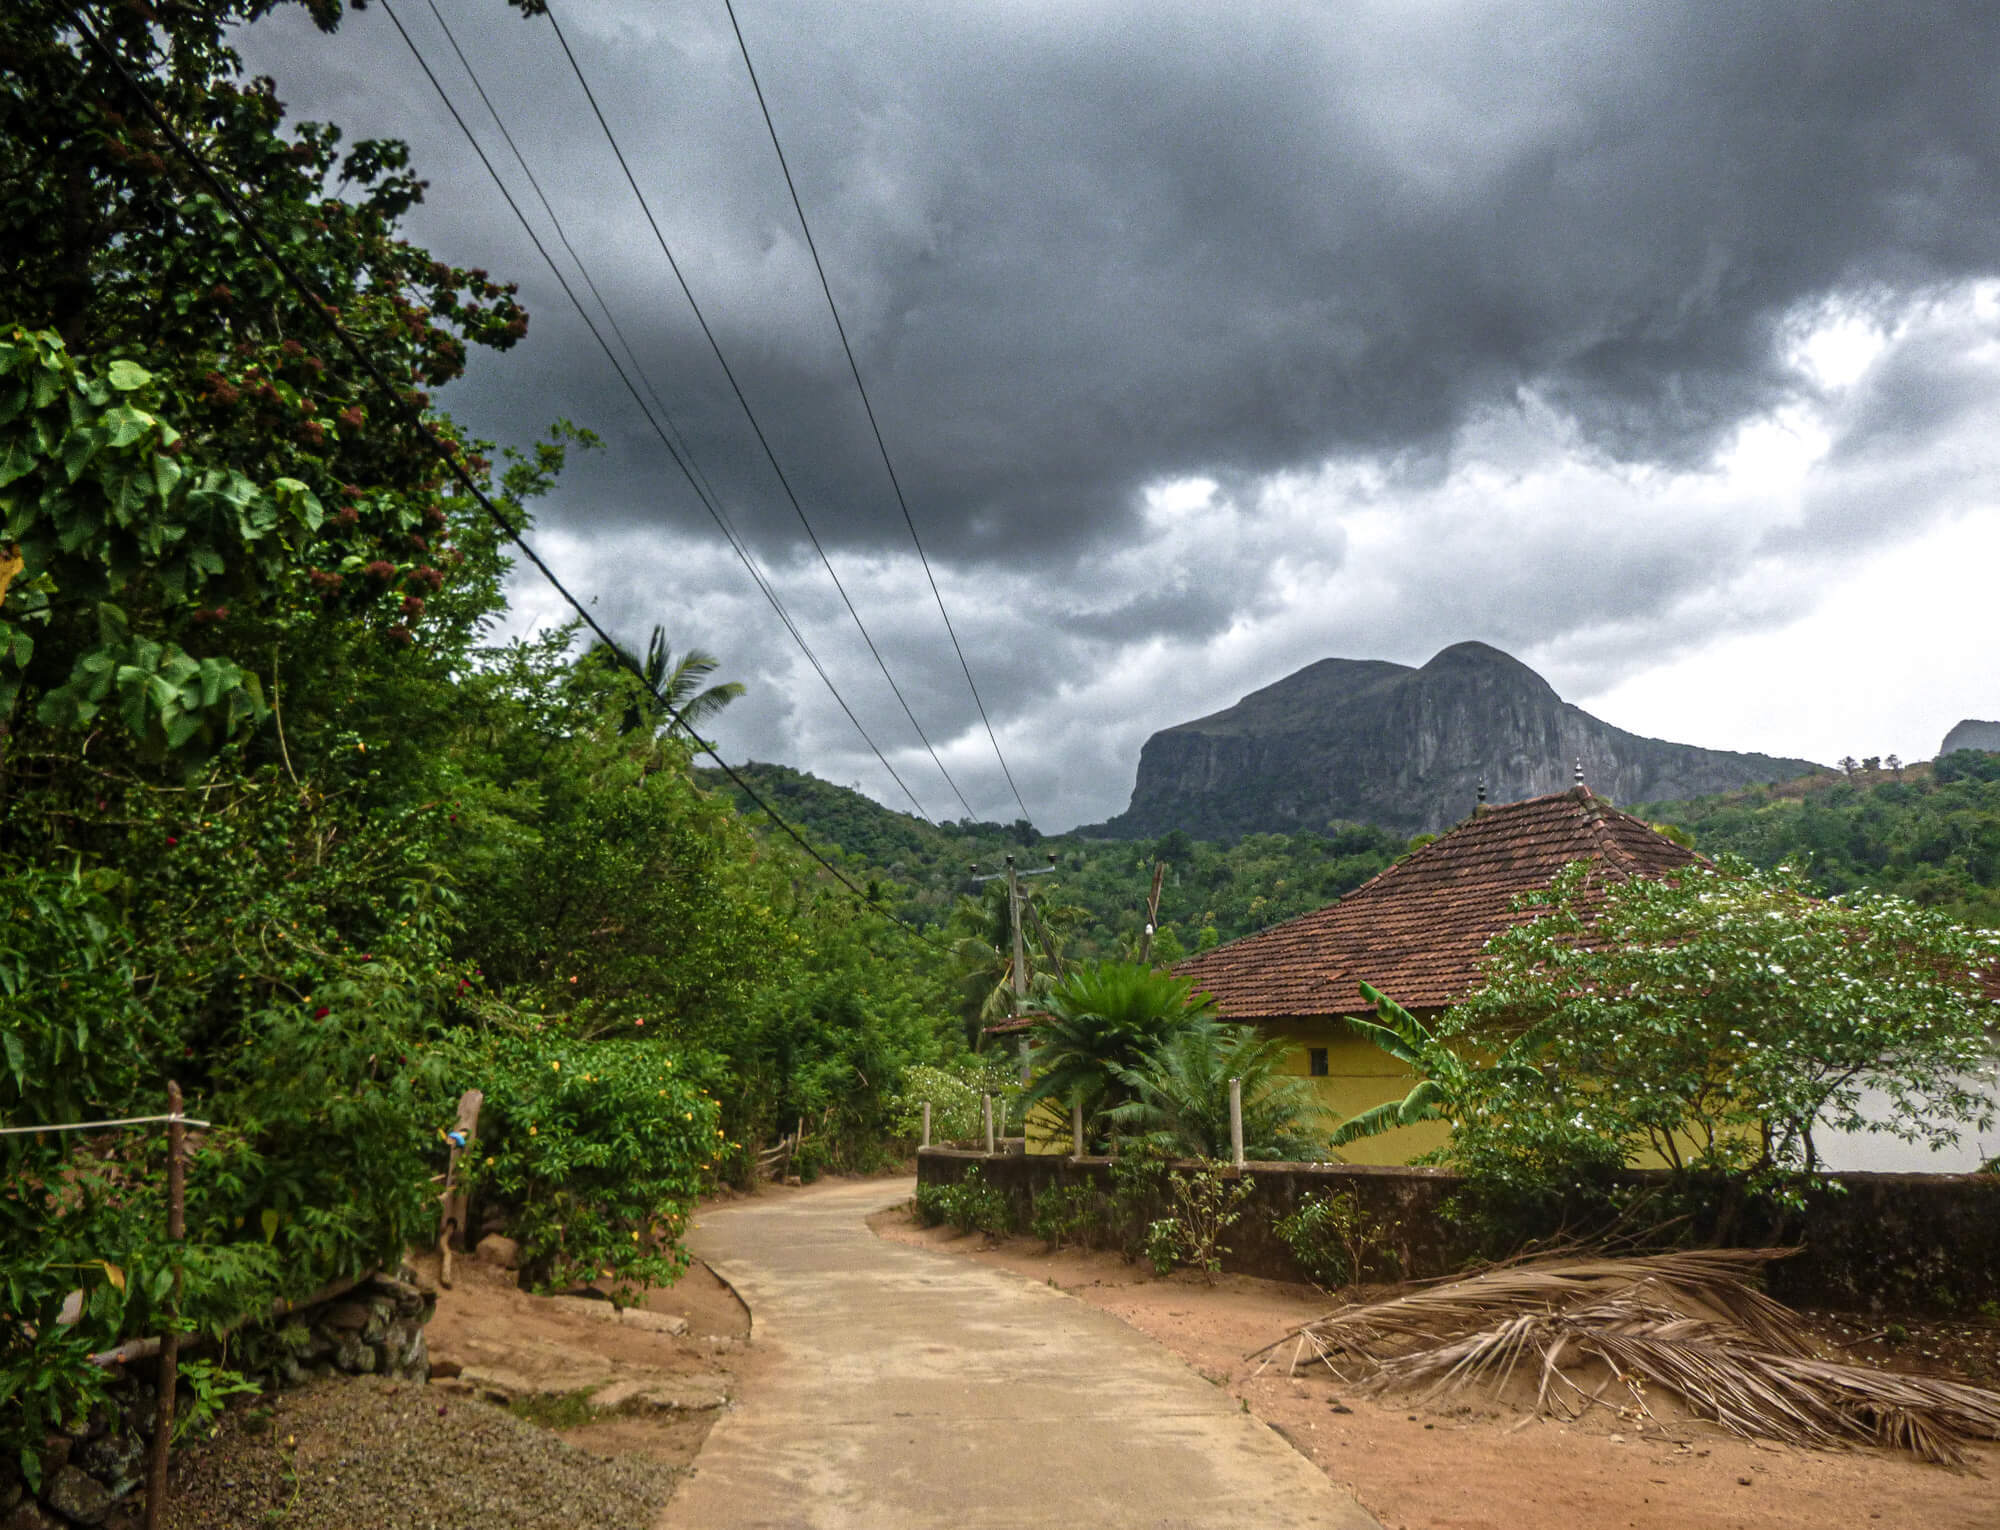 Stormy weather in Sri Lanka's Knuckles Mountain Range